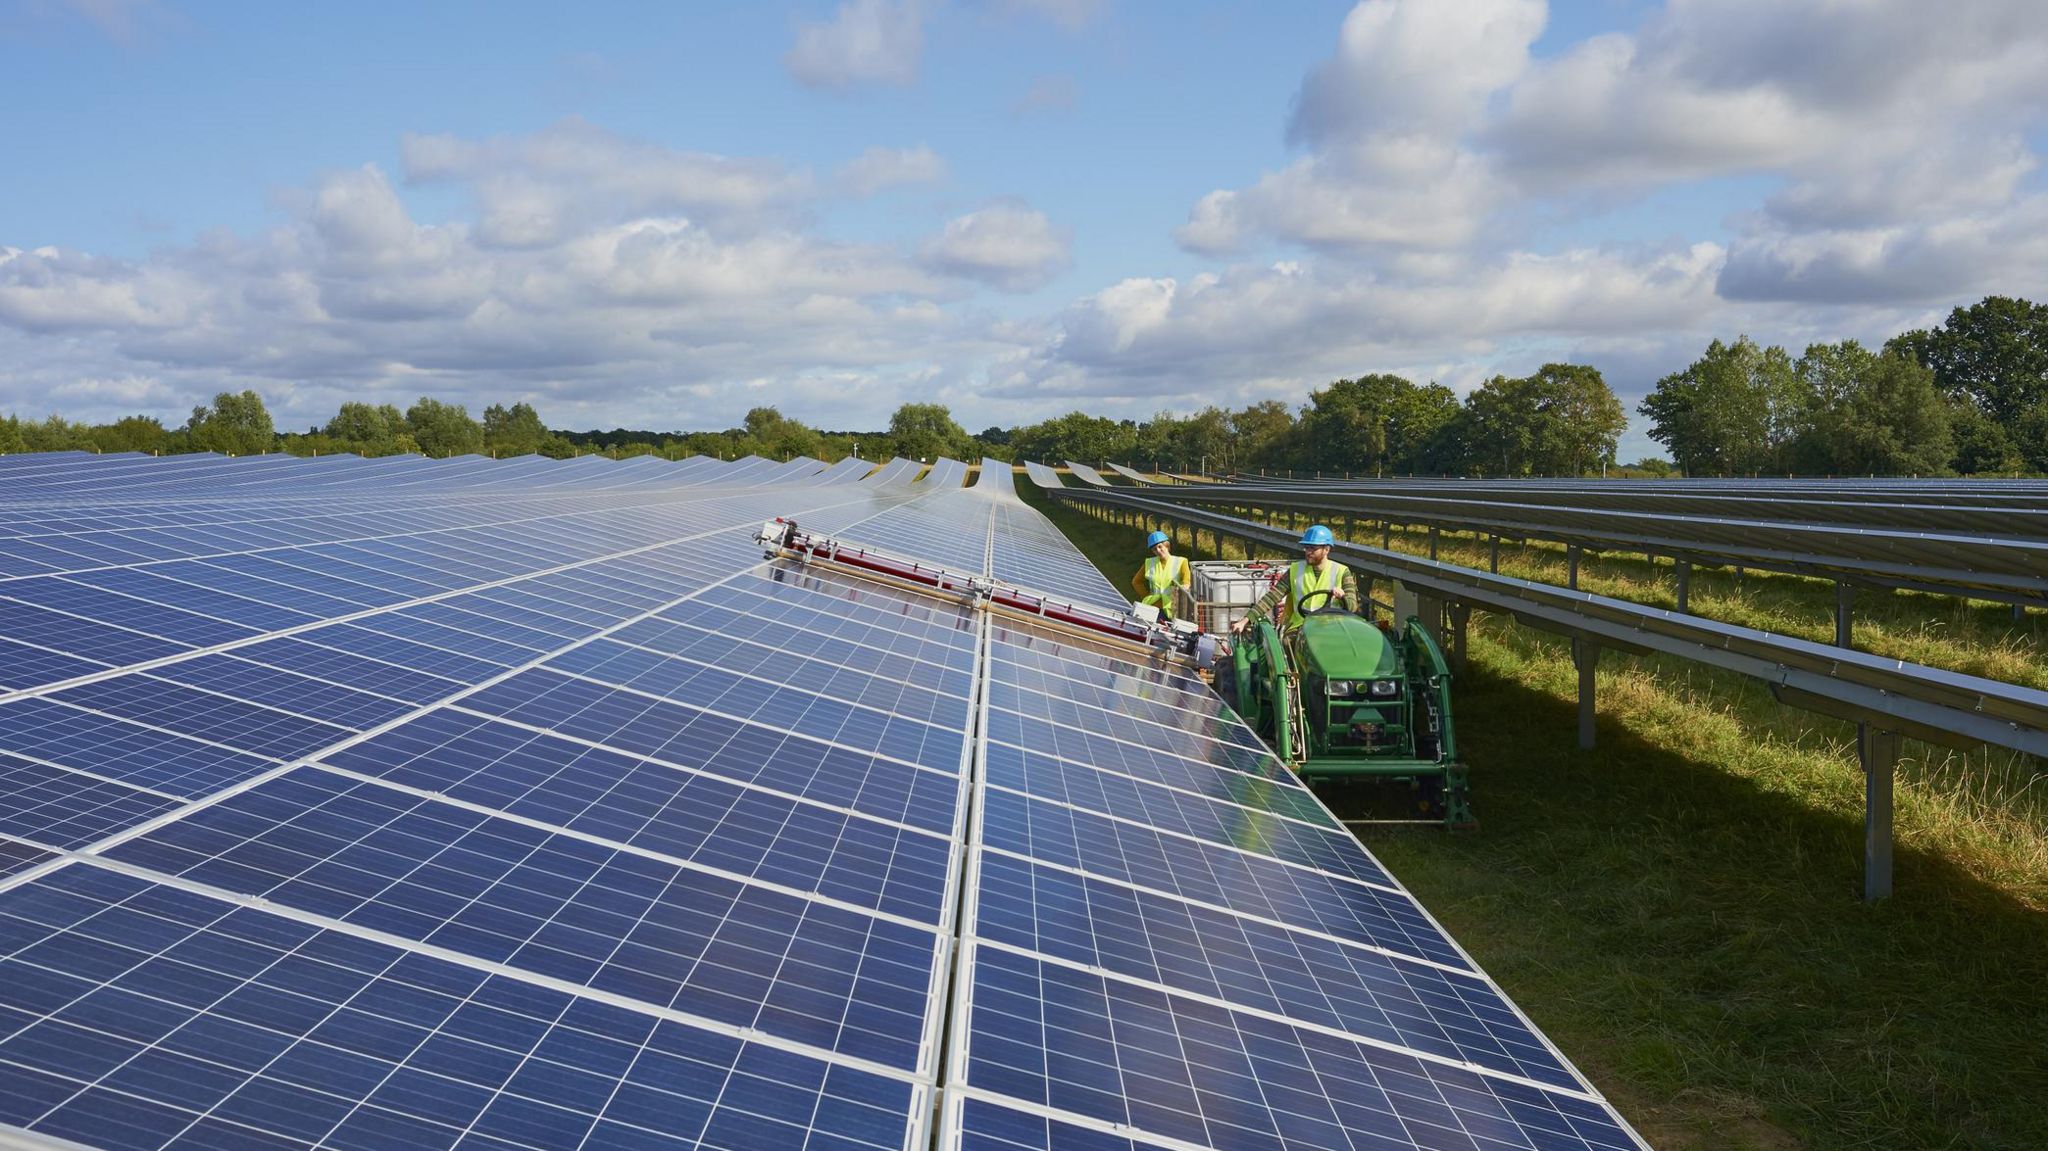 A solar farm in the UK